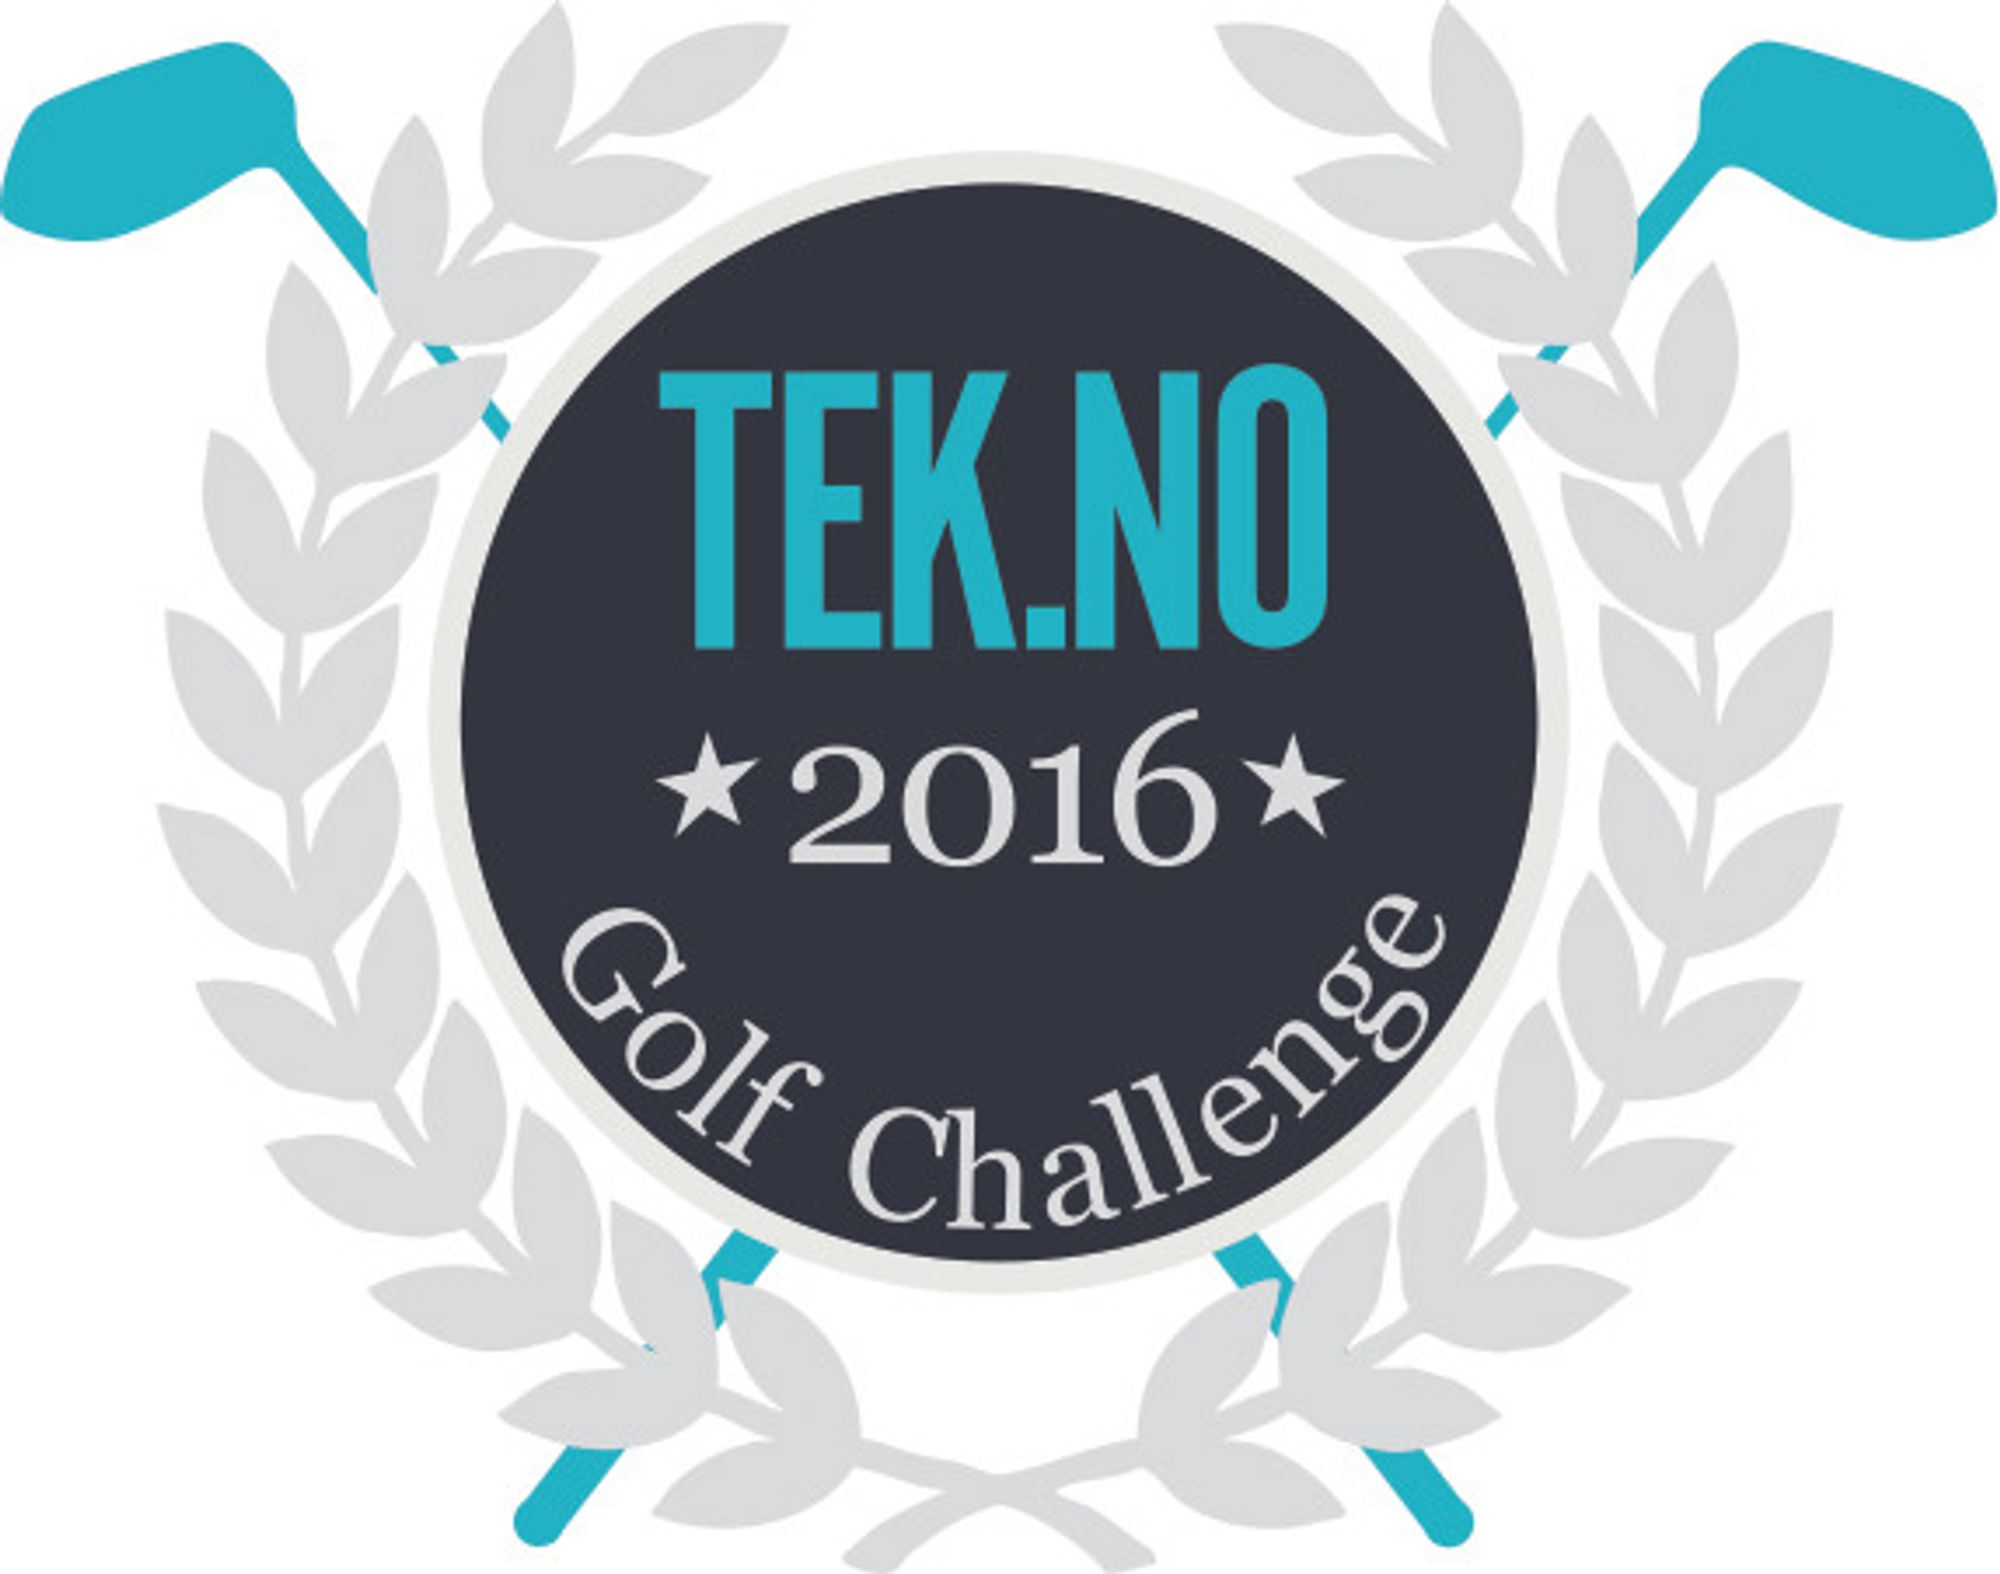 Tek.no Golf Challenge